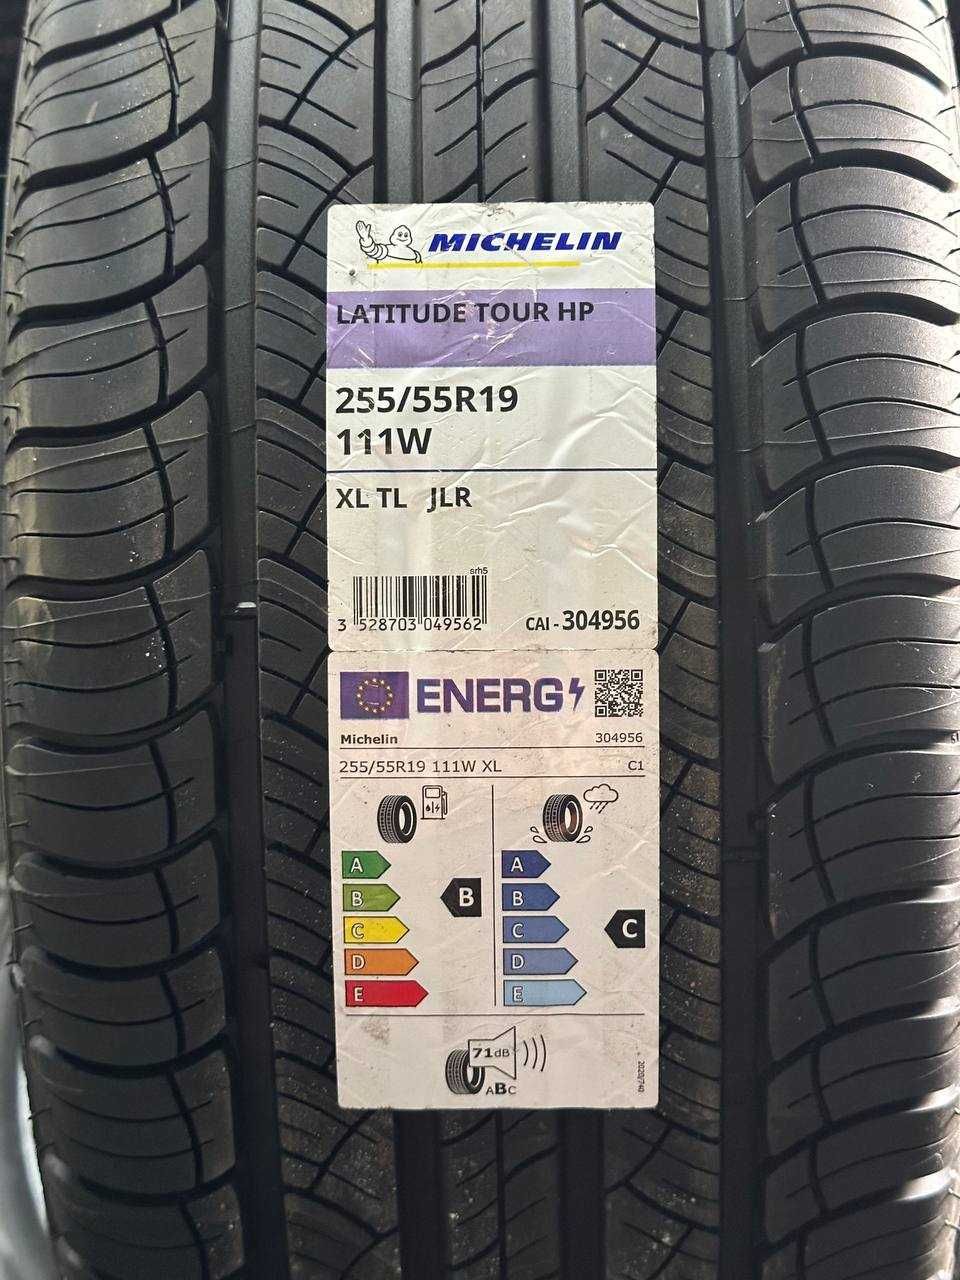 Michelin Latitude Tour HP 255/55 R19 111W XL JLR